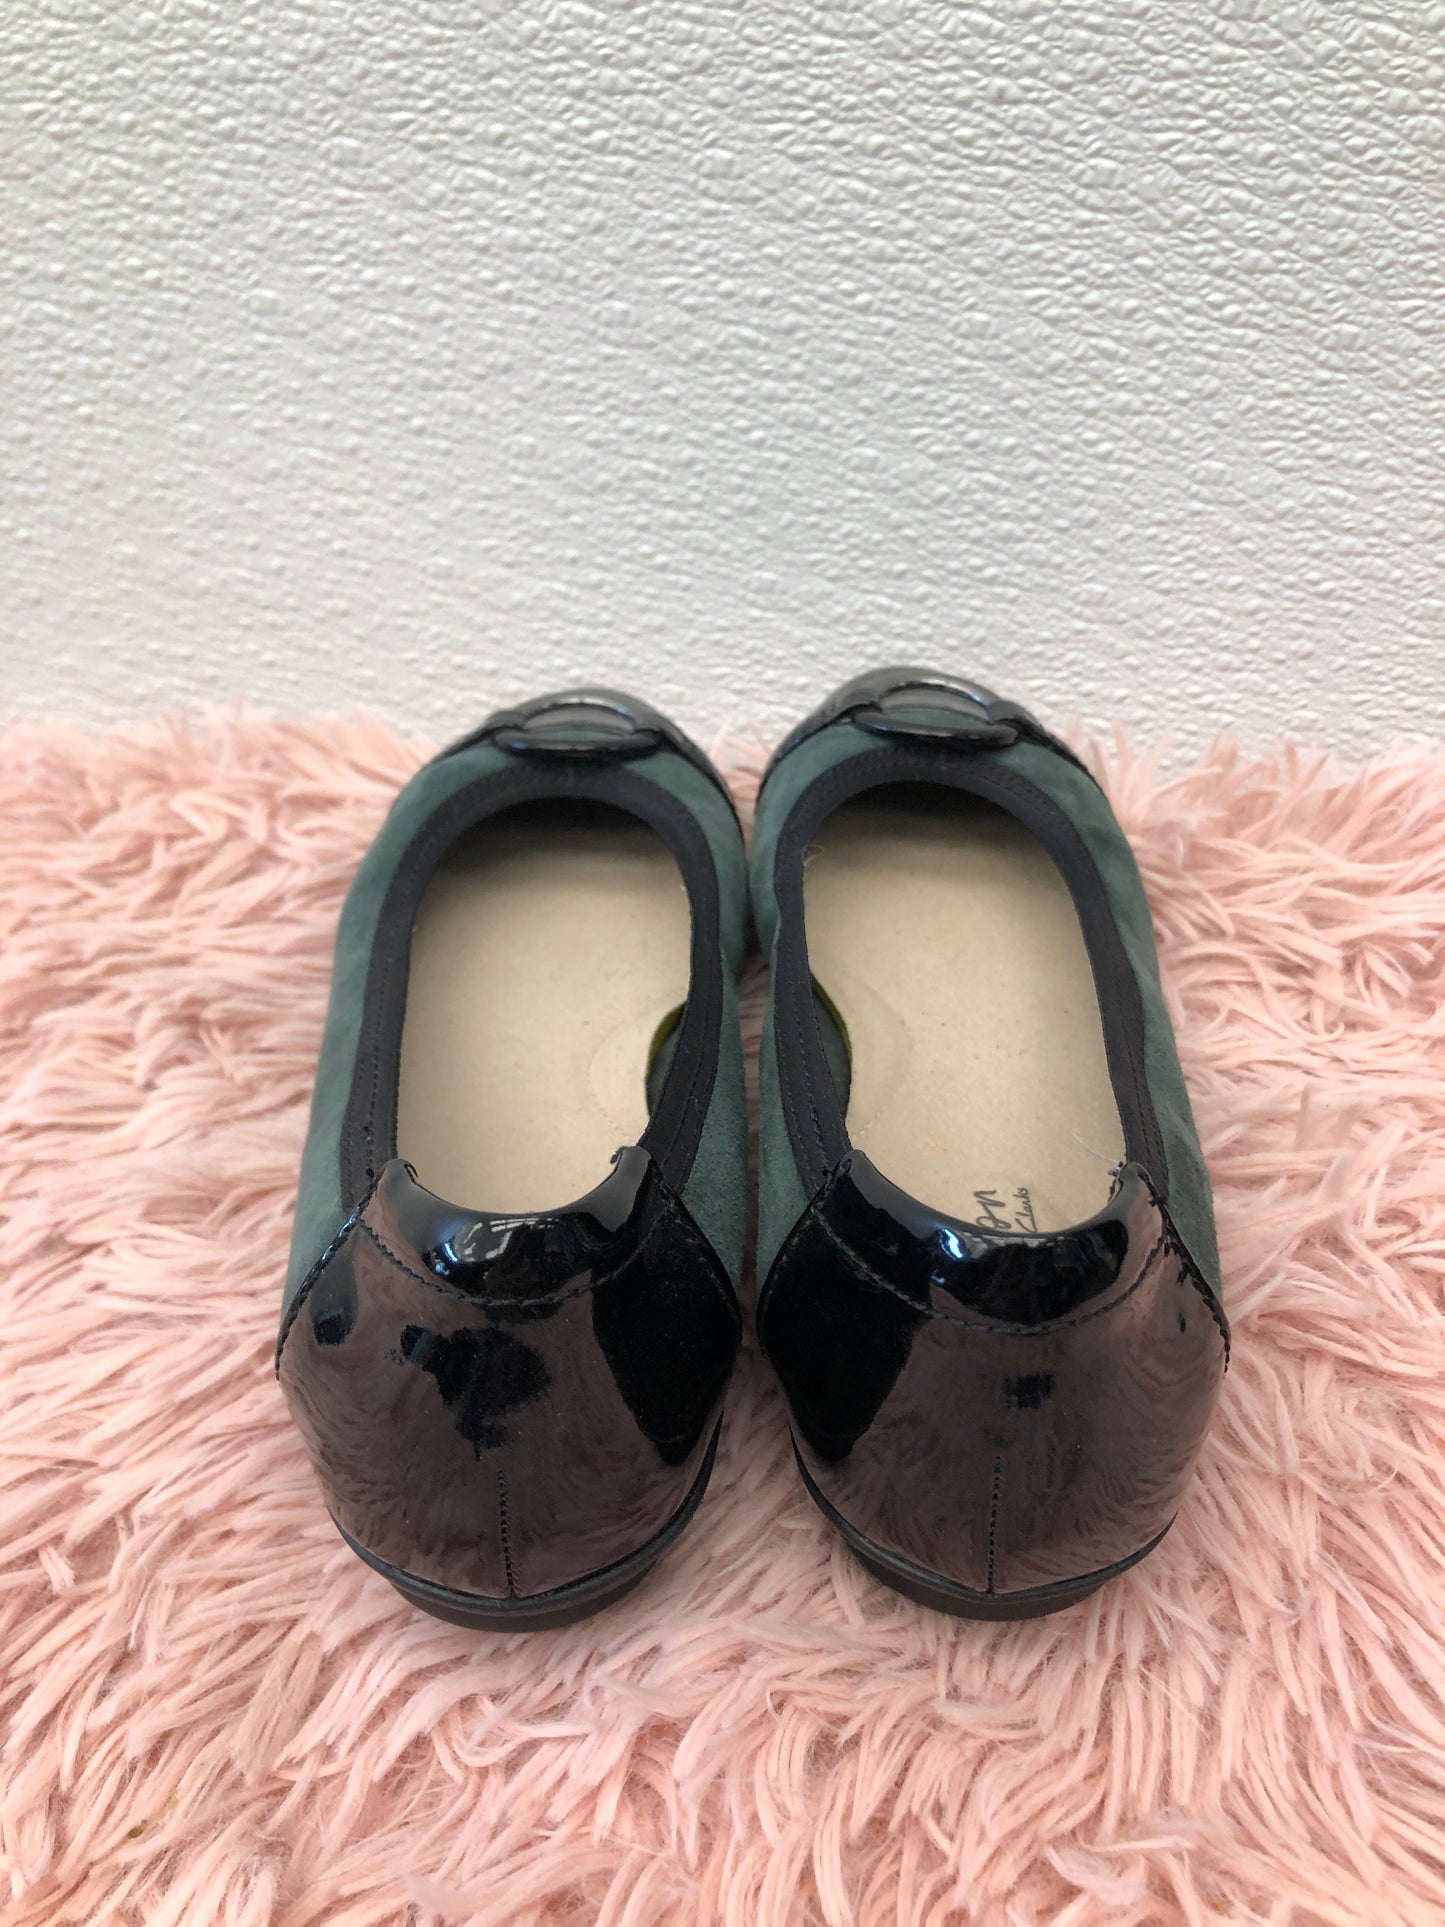 Green Shoes Flats Ballet Clarks, Size 6